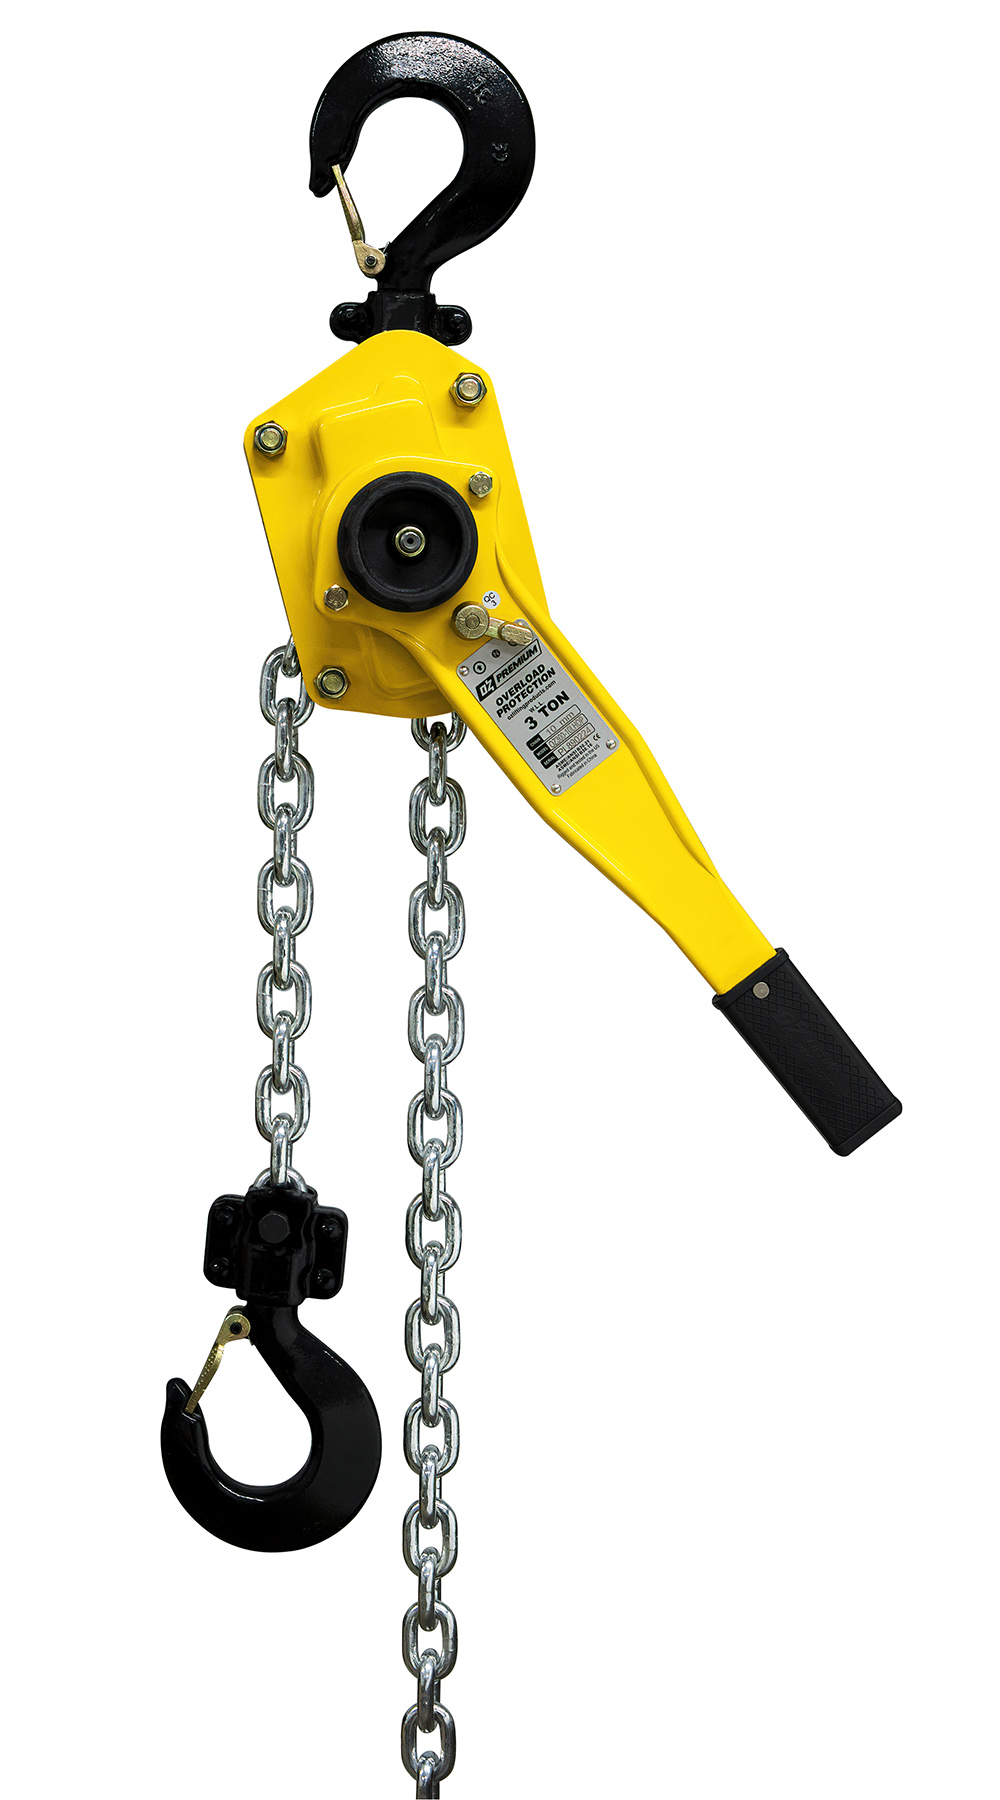 1/2 Ton Cap. Overload Protection 1-10' Lift OZ Lifting Manual Chain Hoist w/Std 